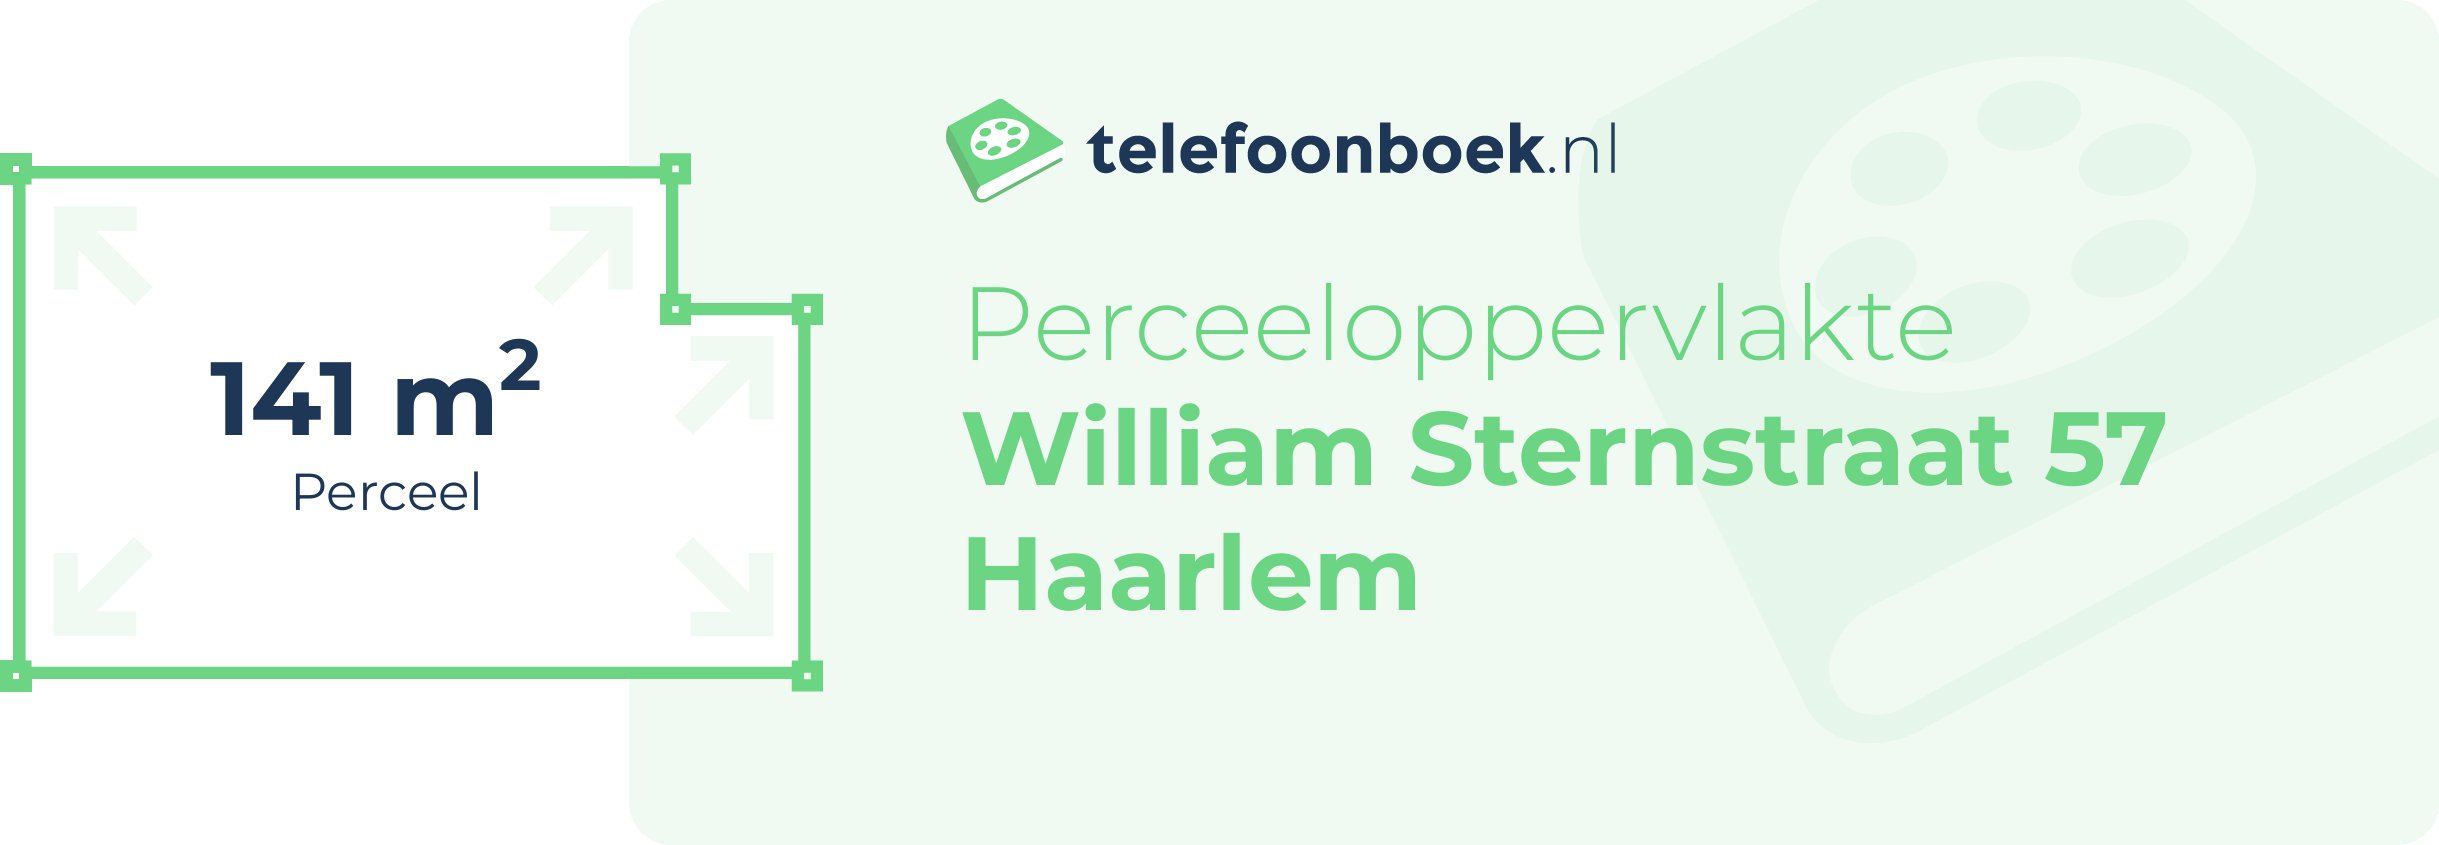 Perceeloppervlakte William Sternstraat 57 Haarlem